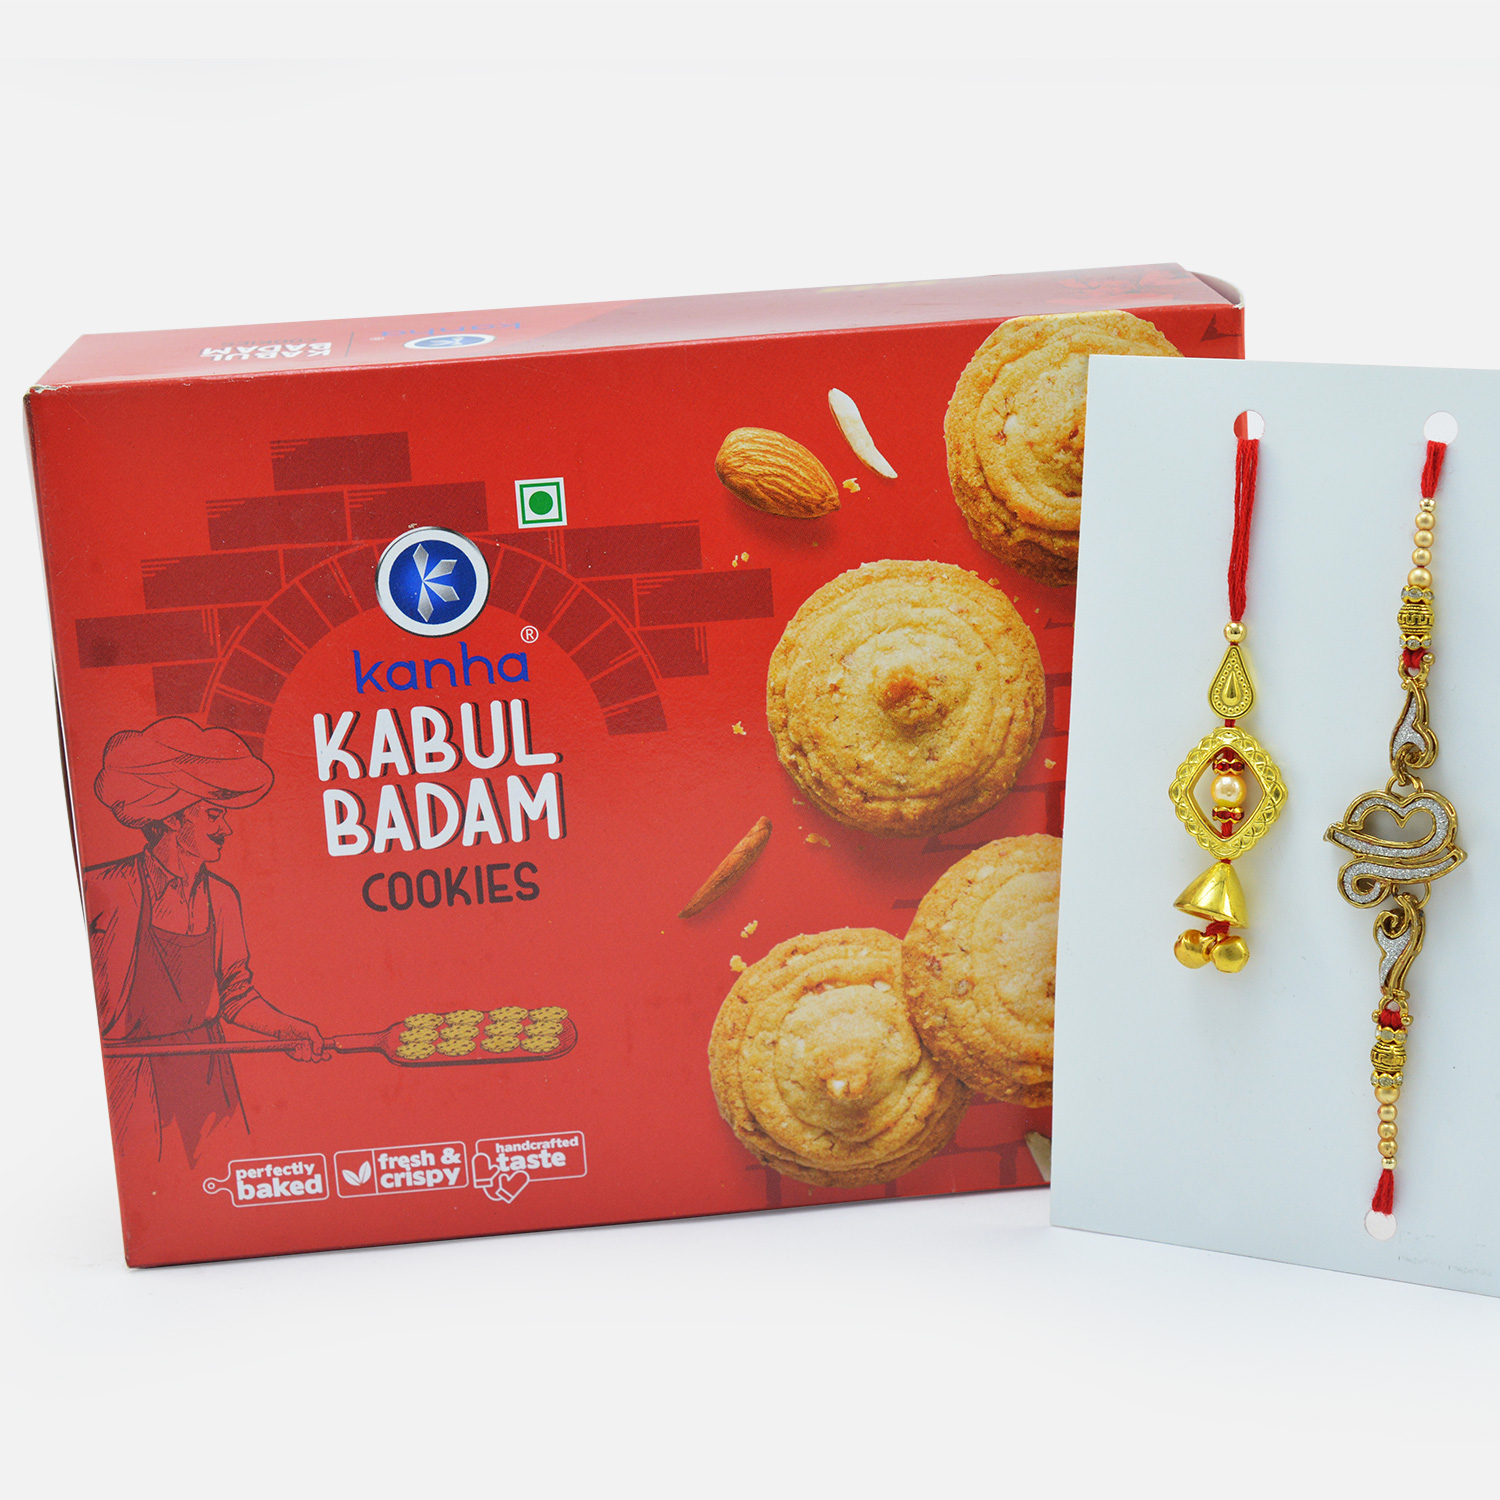 Kanha Kabul Badam Cookies with Ik Onkar Rakhi and Golden Color Bhabhi Rakhi